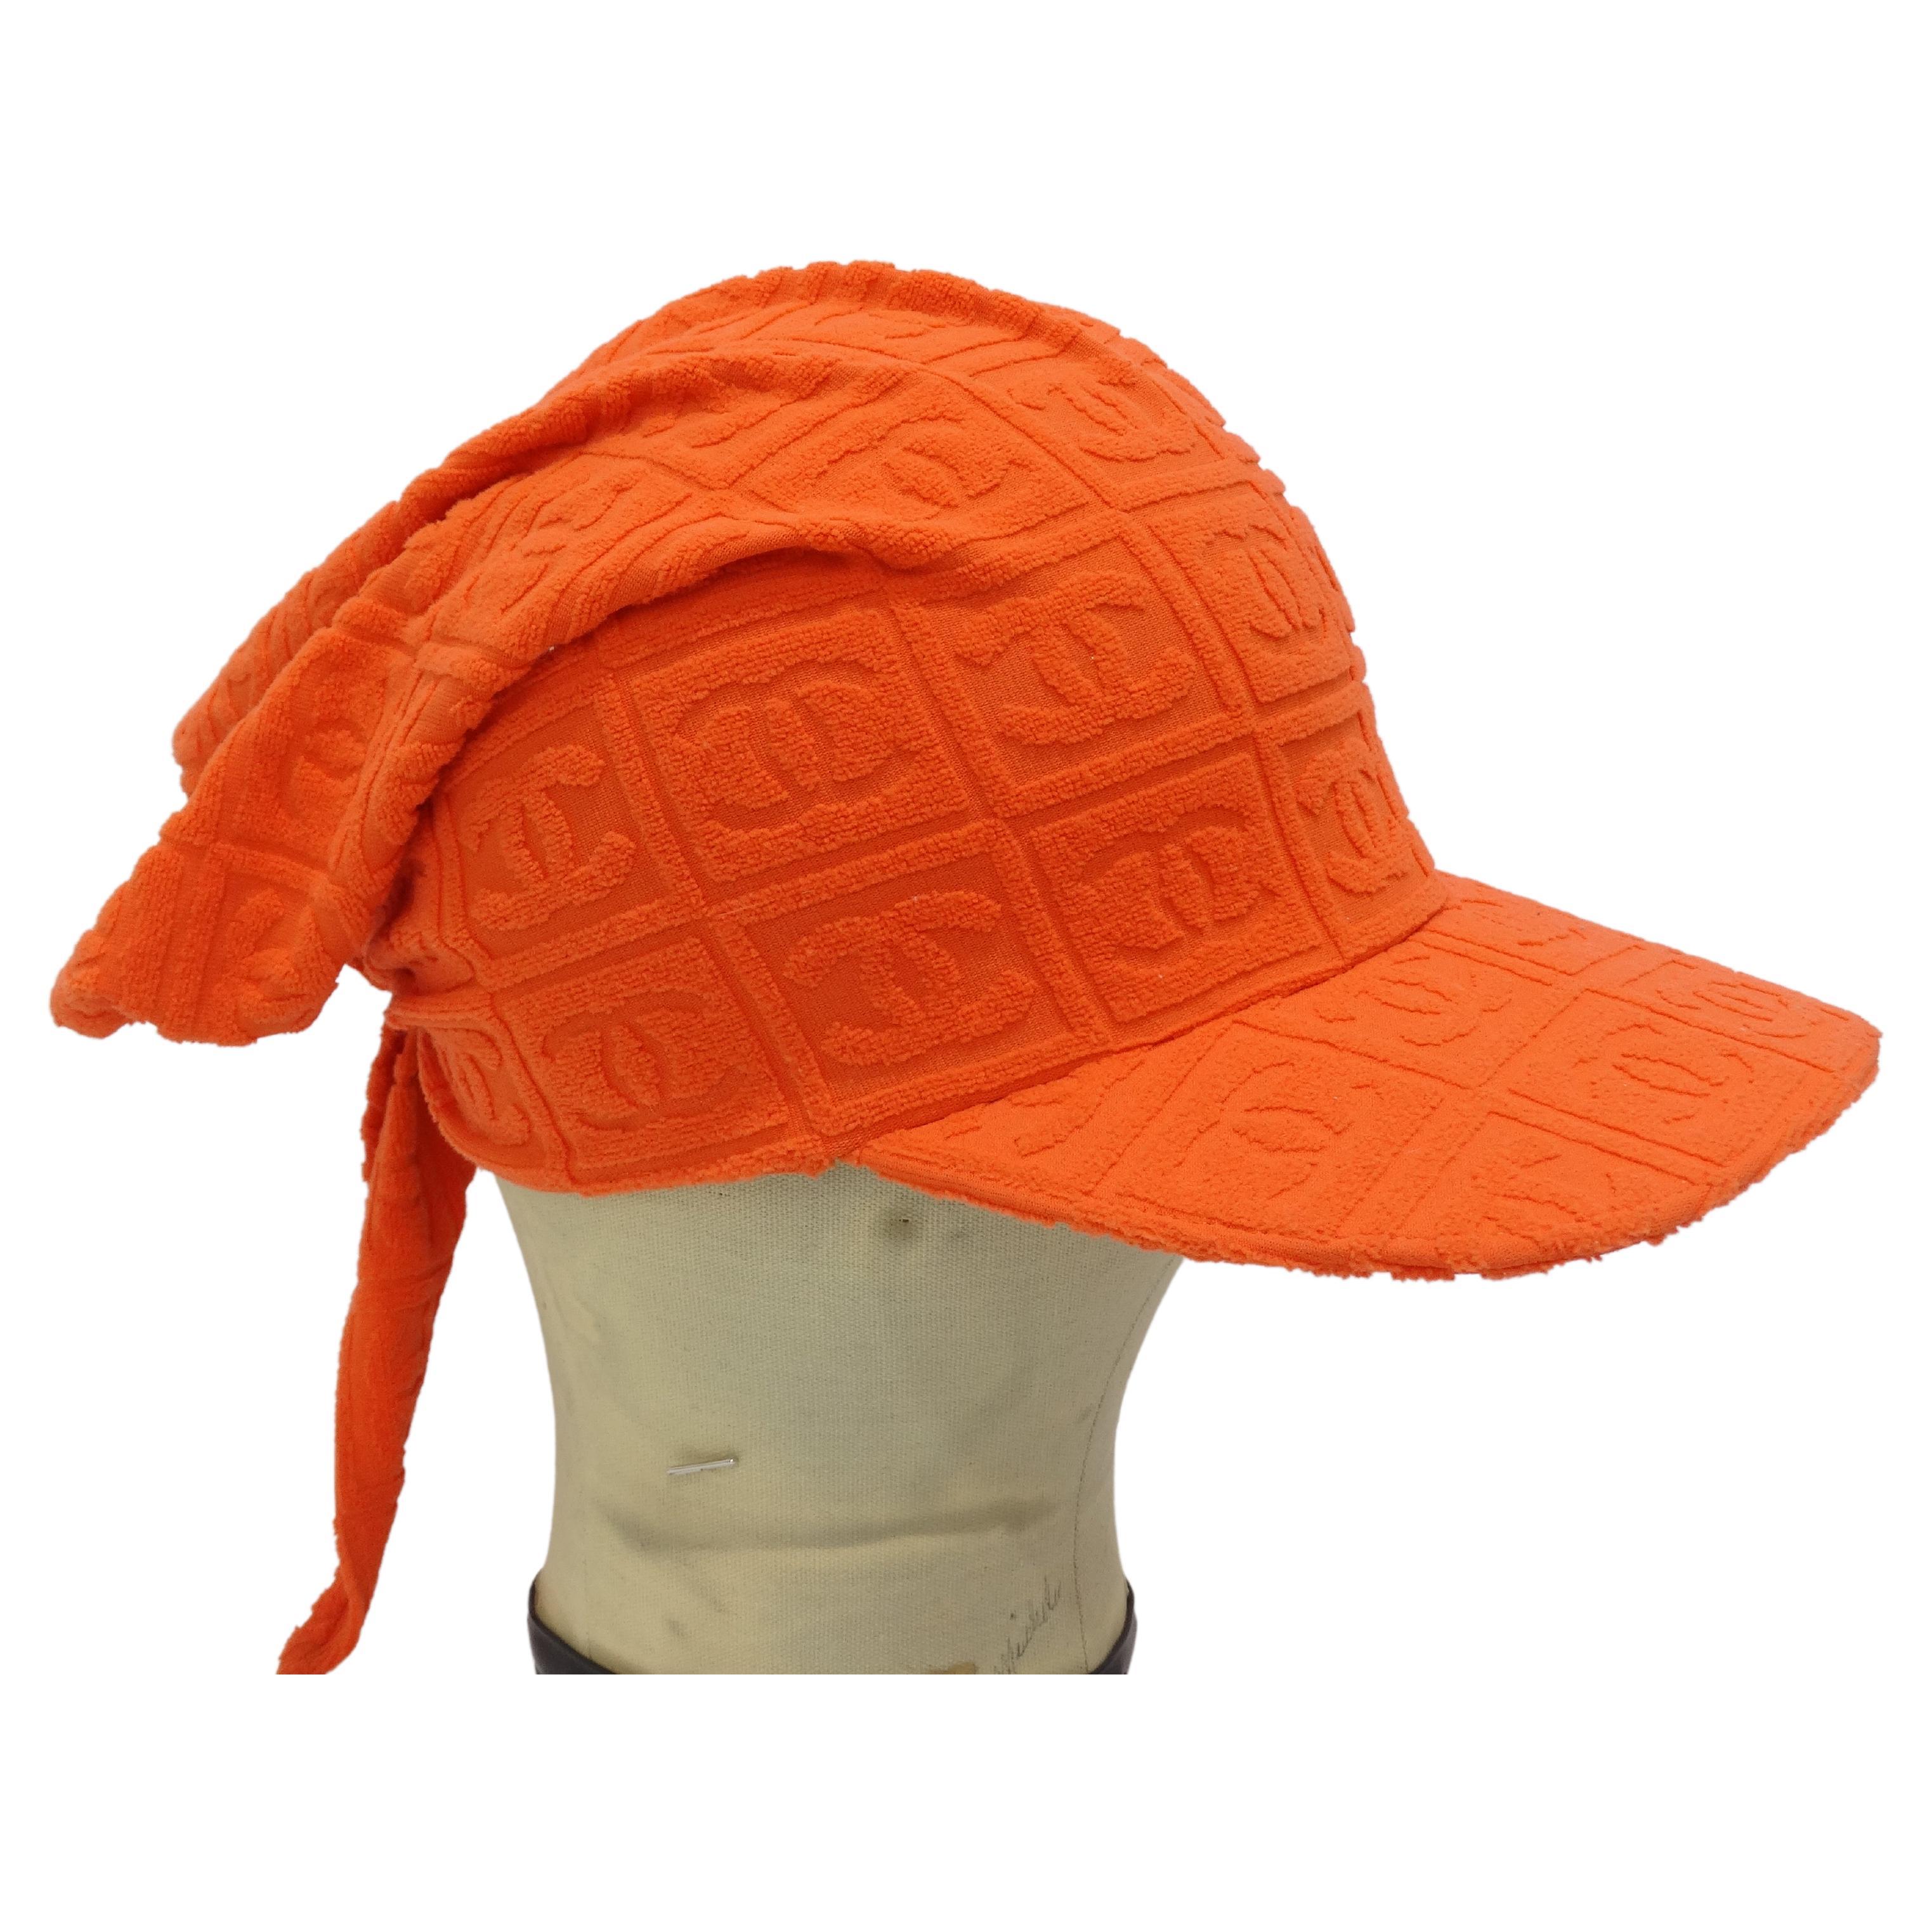 discount 94% WOMEN FASHION Accessories Hat and cap Orange Orange Single NoName hat and cap 